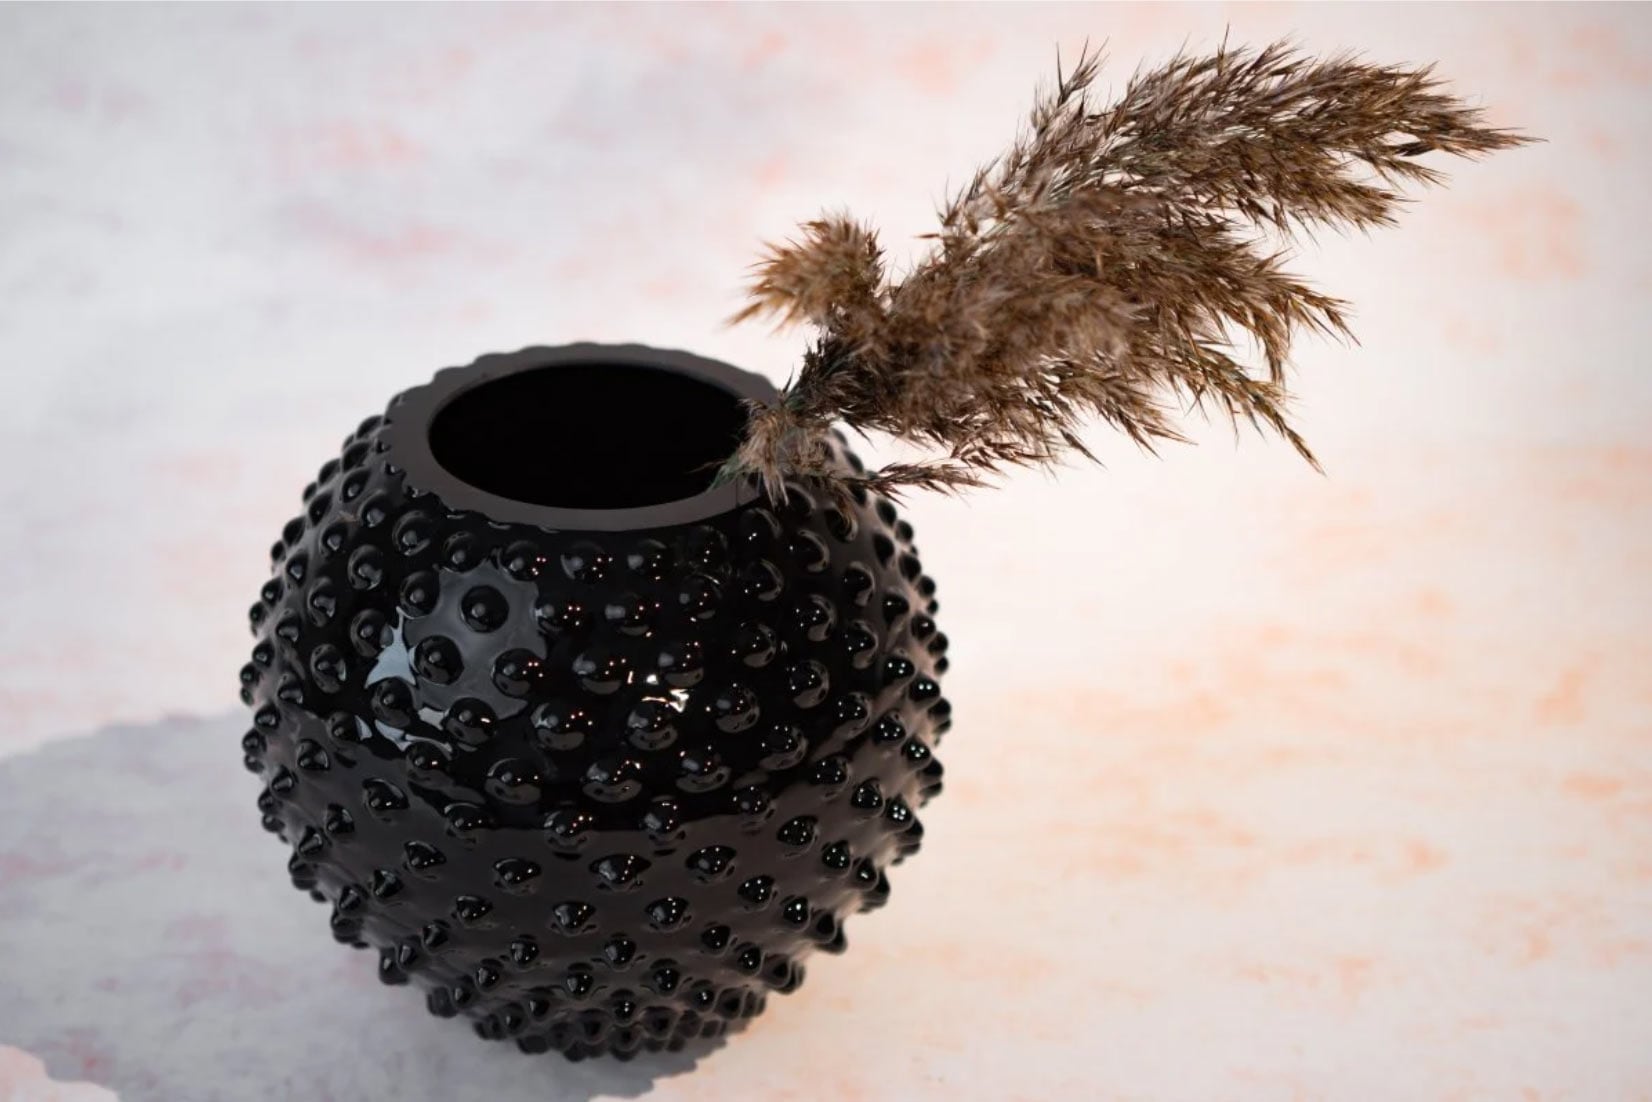 Klimchi Black Hobnail Vase